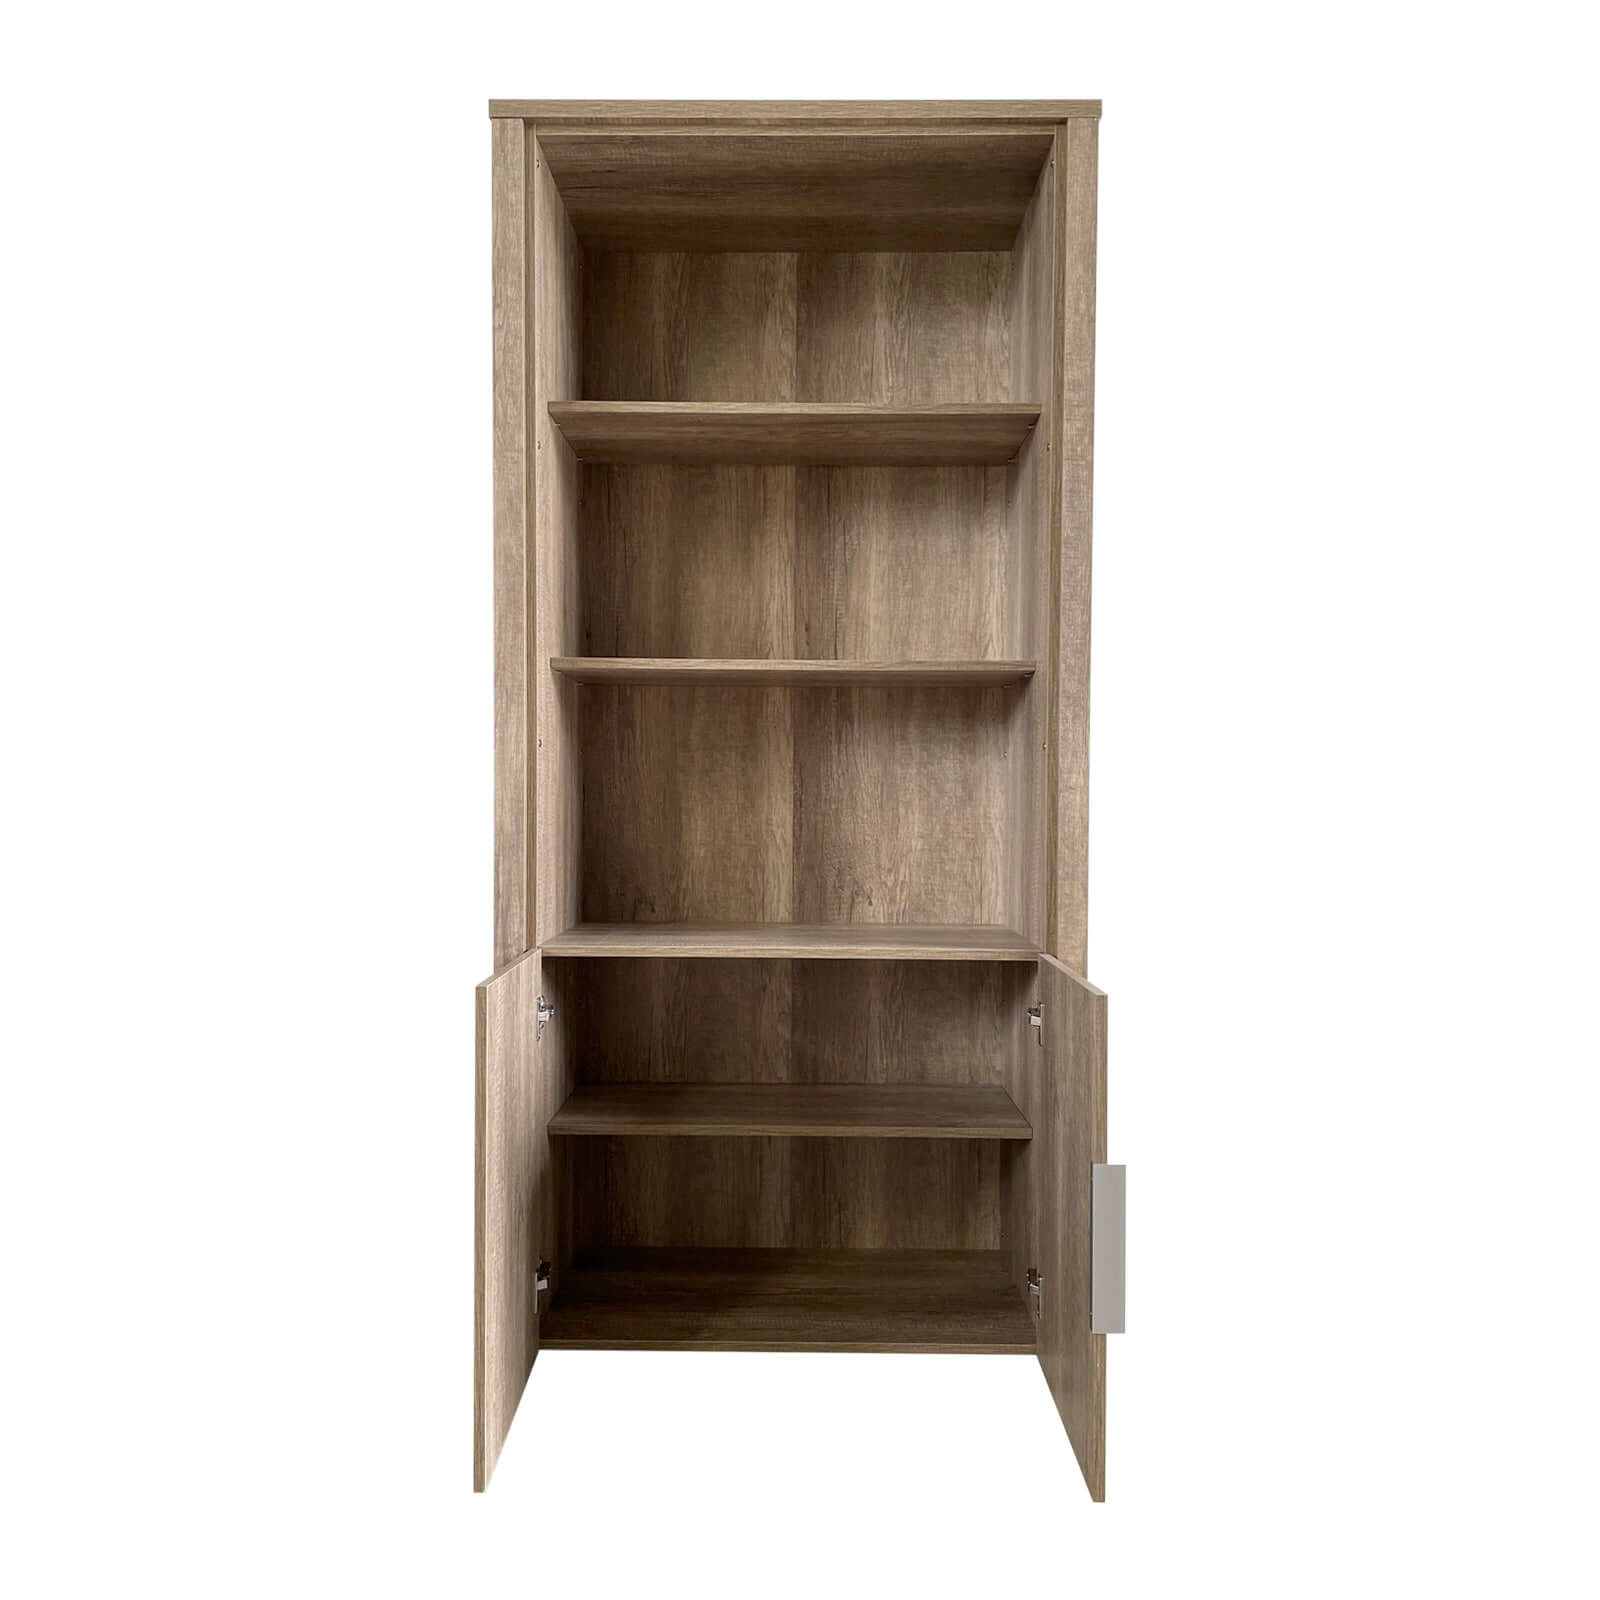 Display Shelf Book Case Stand Bookshelf Natural Wood like MDF in Oak Colour-Upinteriors